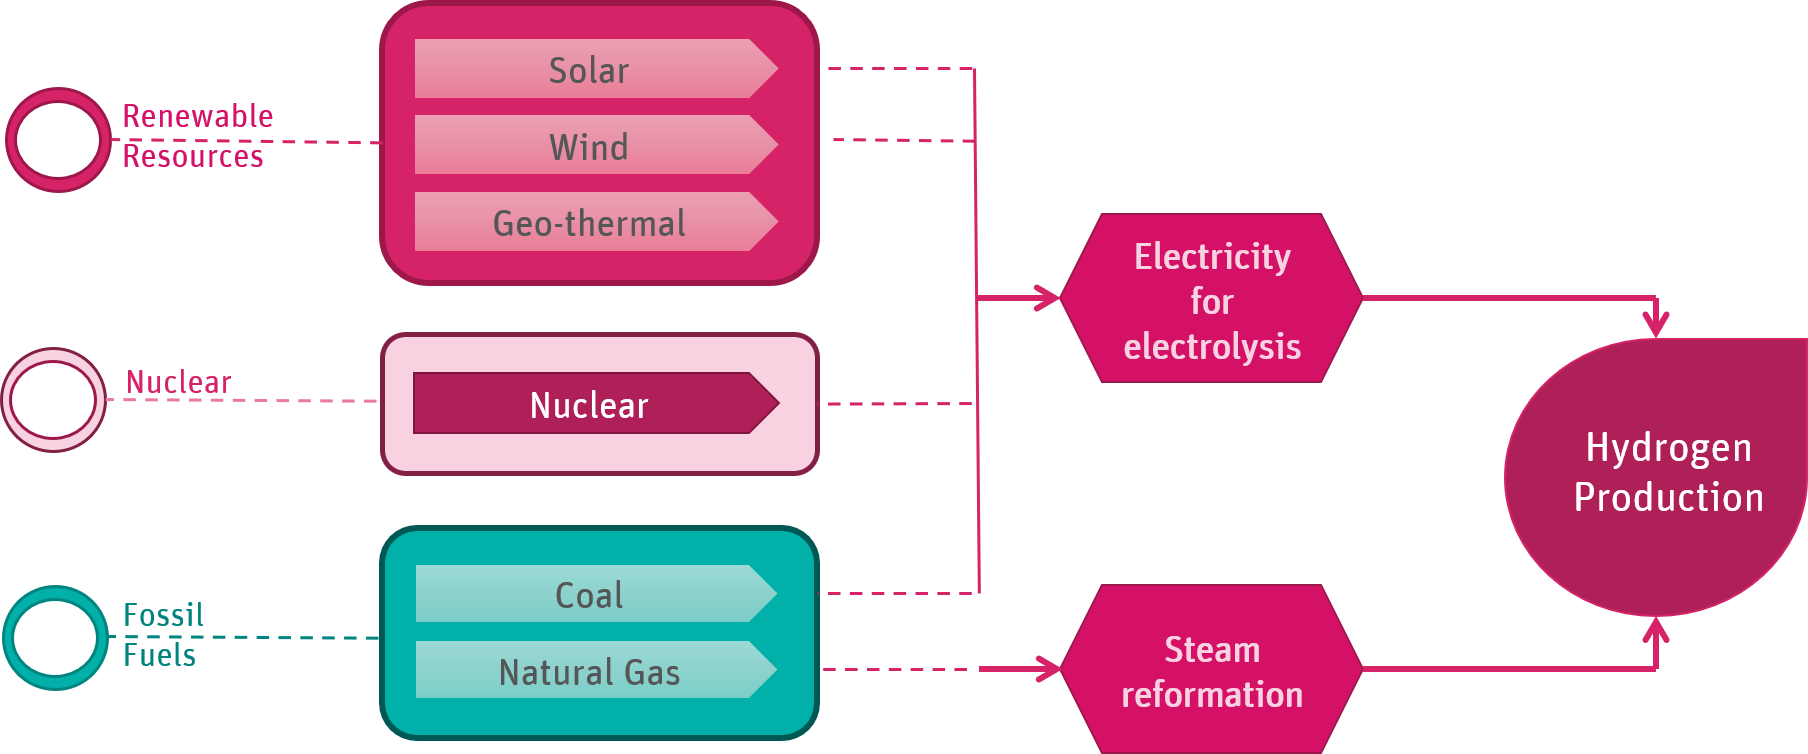 hydrogen generation process